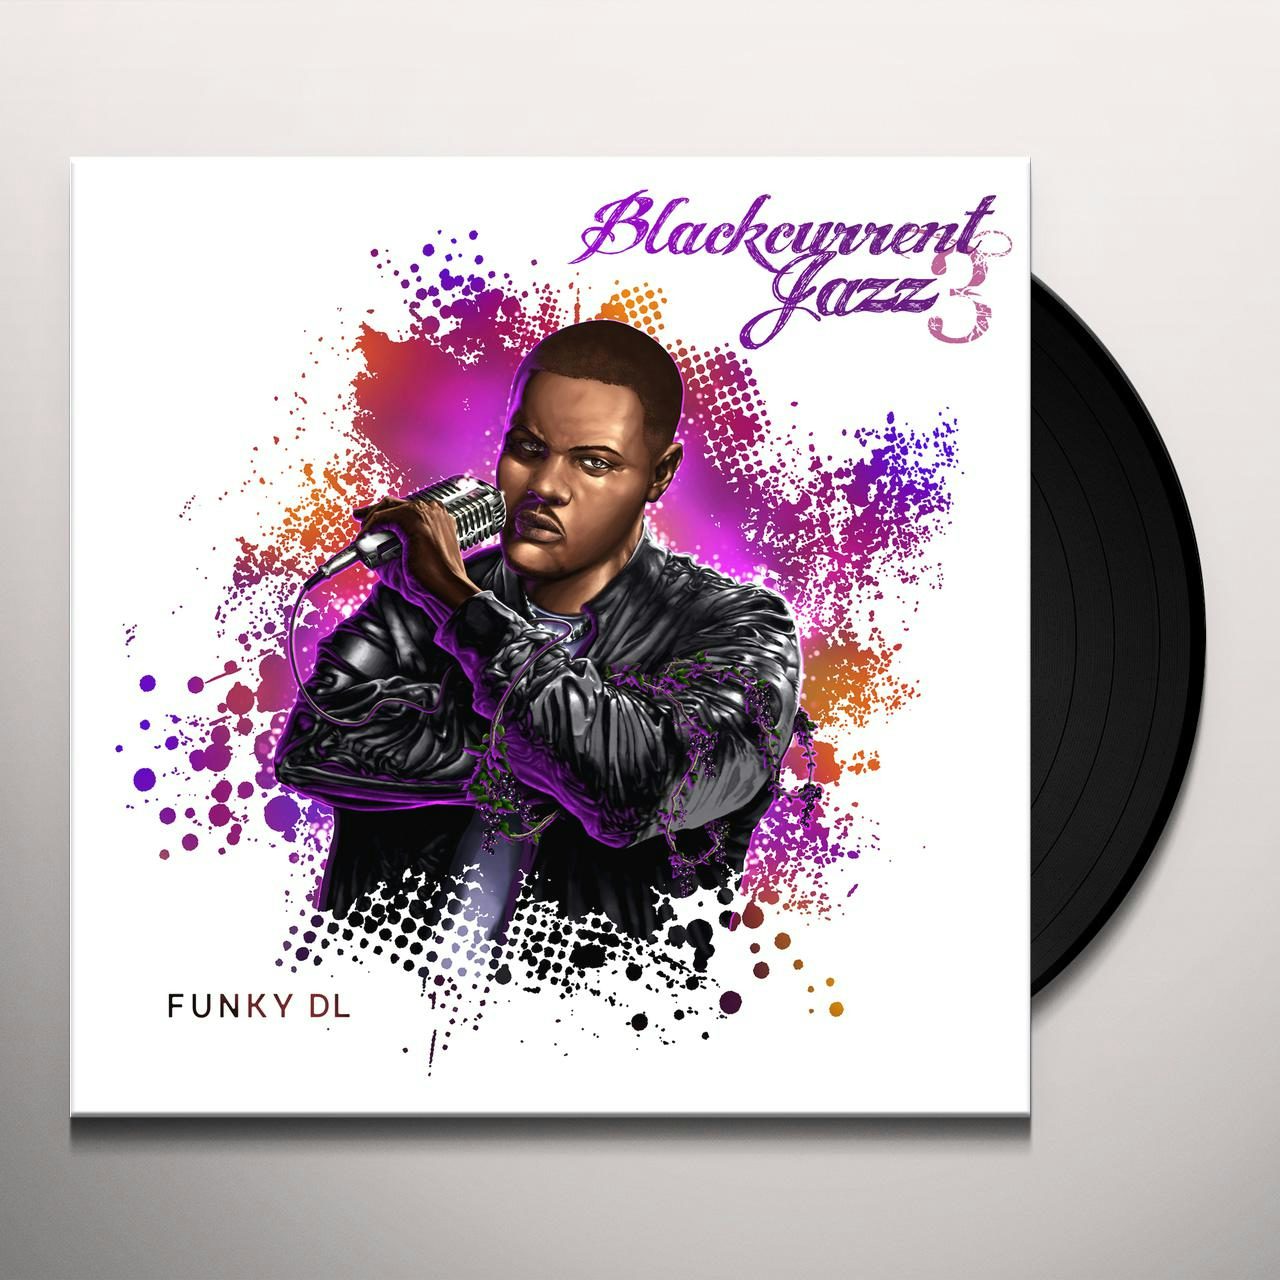 Funky DL Blackcurrent Jazz 3 Vinyl Record